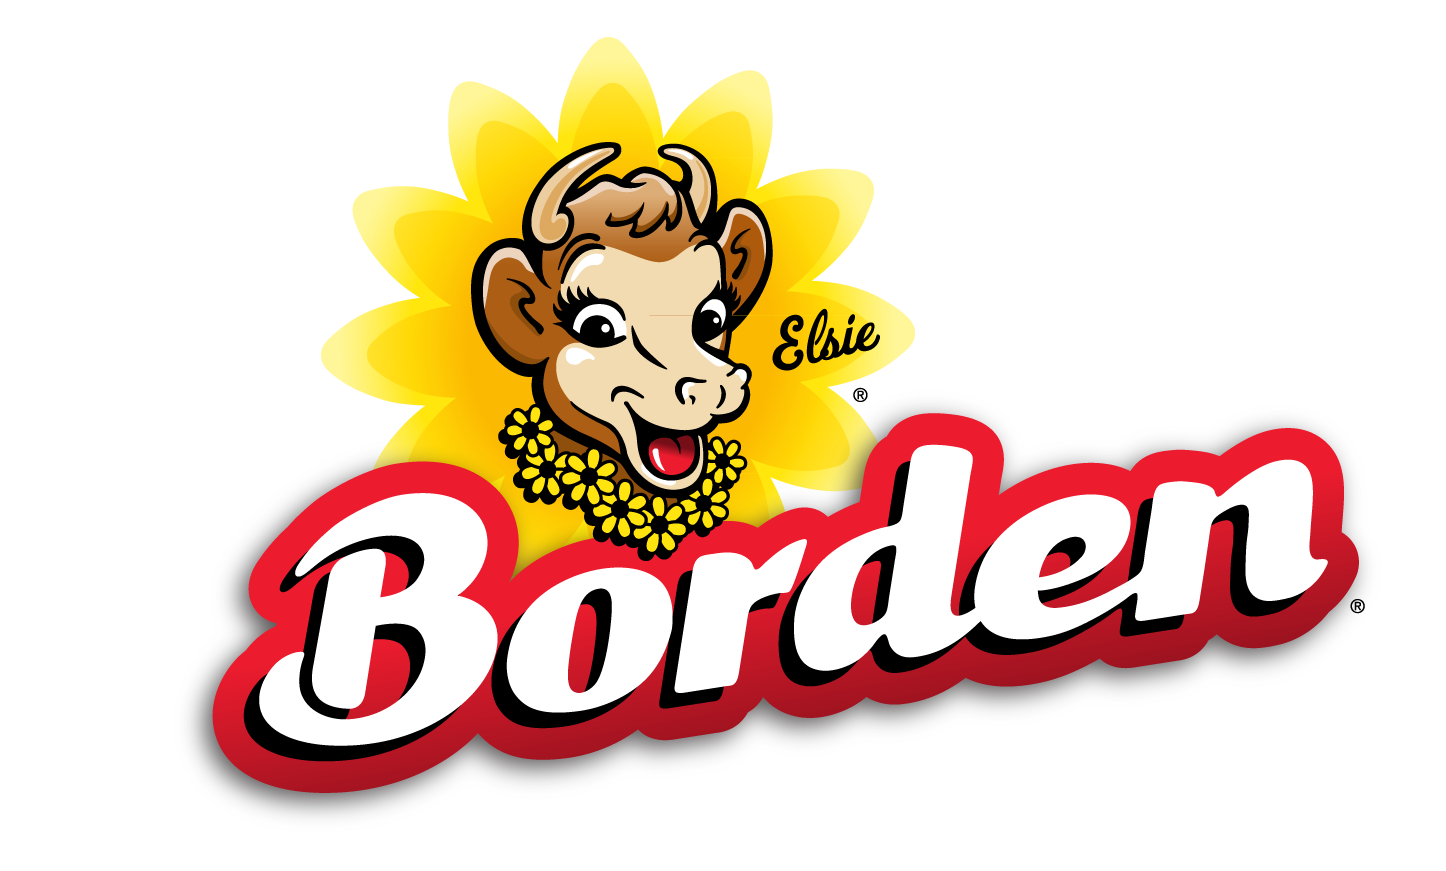 Borden increases its US milk distribution